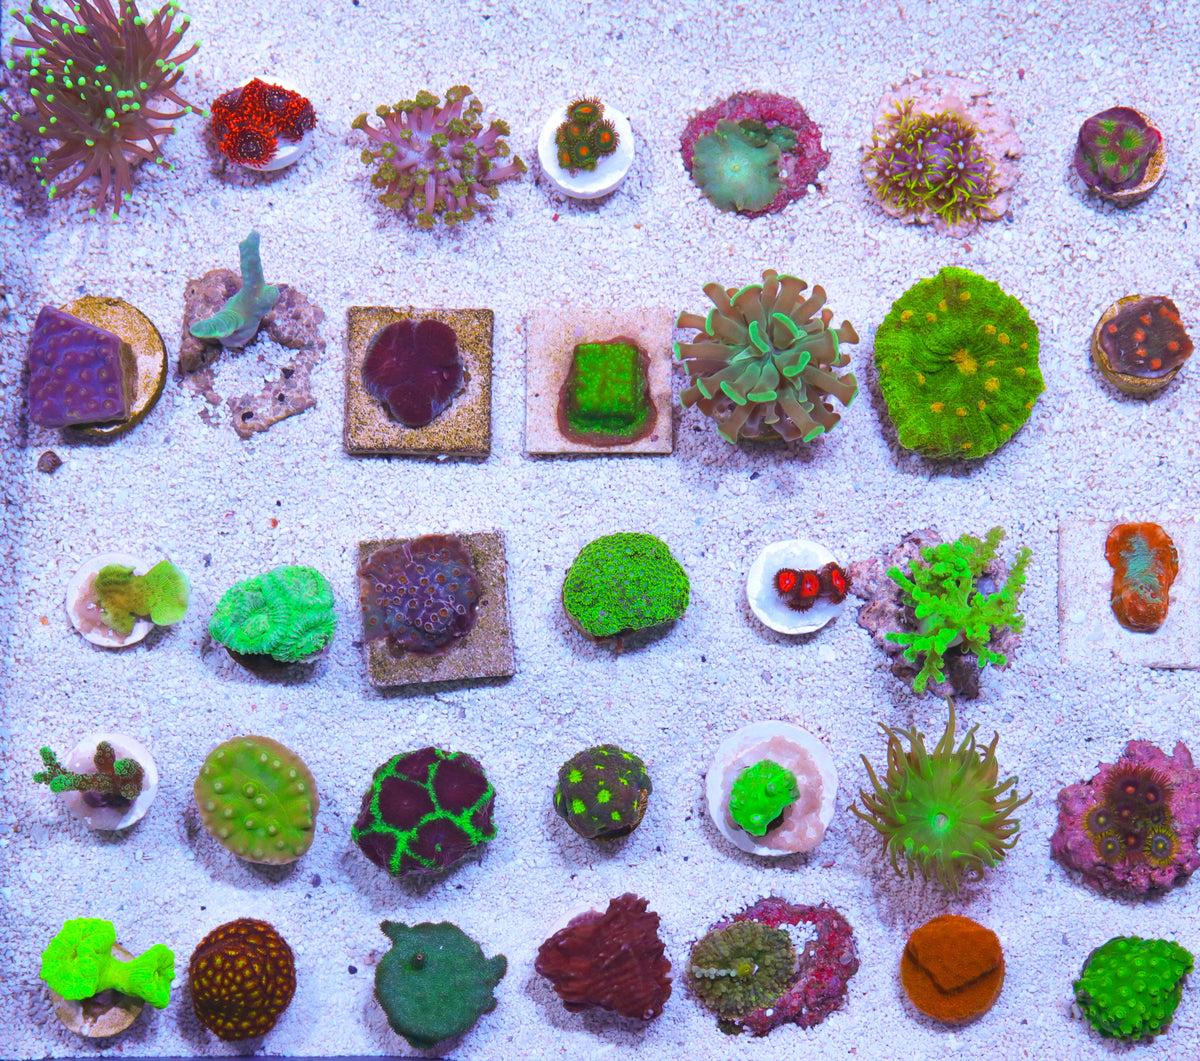 10 pack of Biota Aquacultured Coral Frags